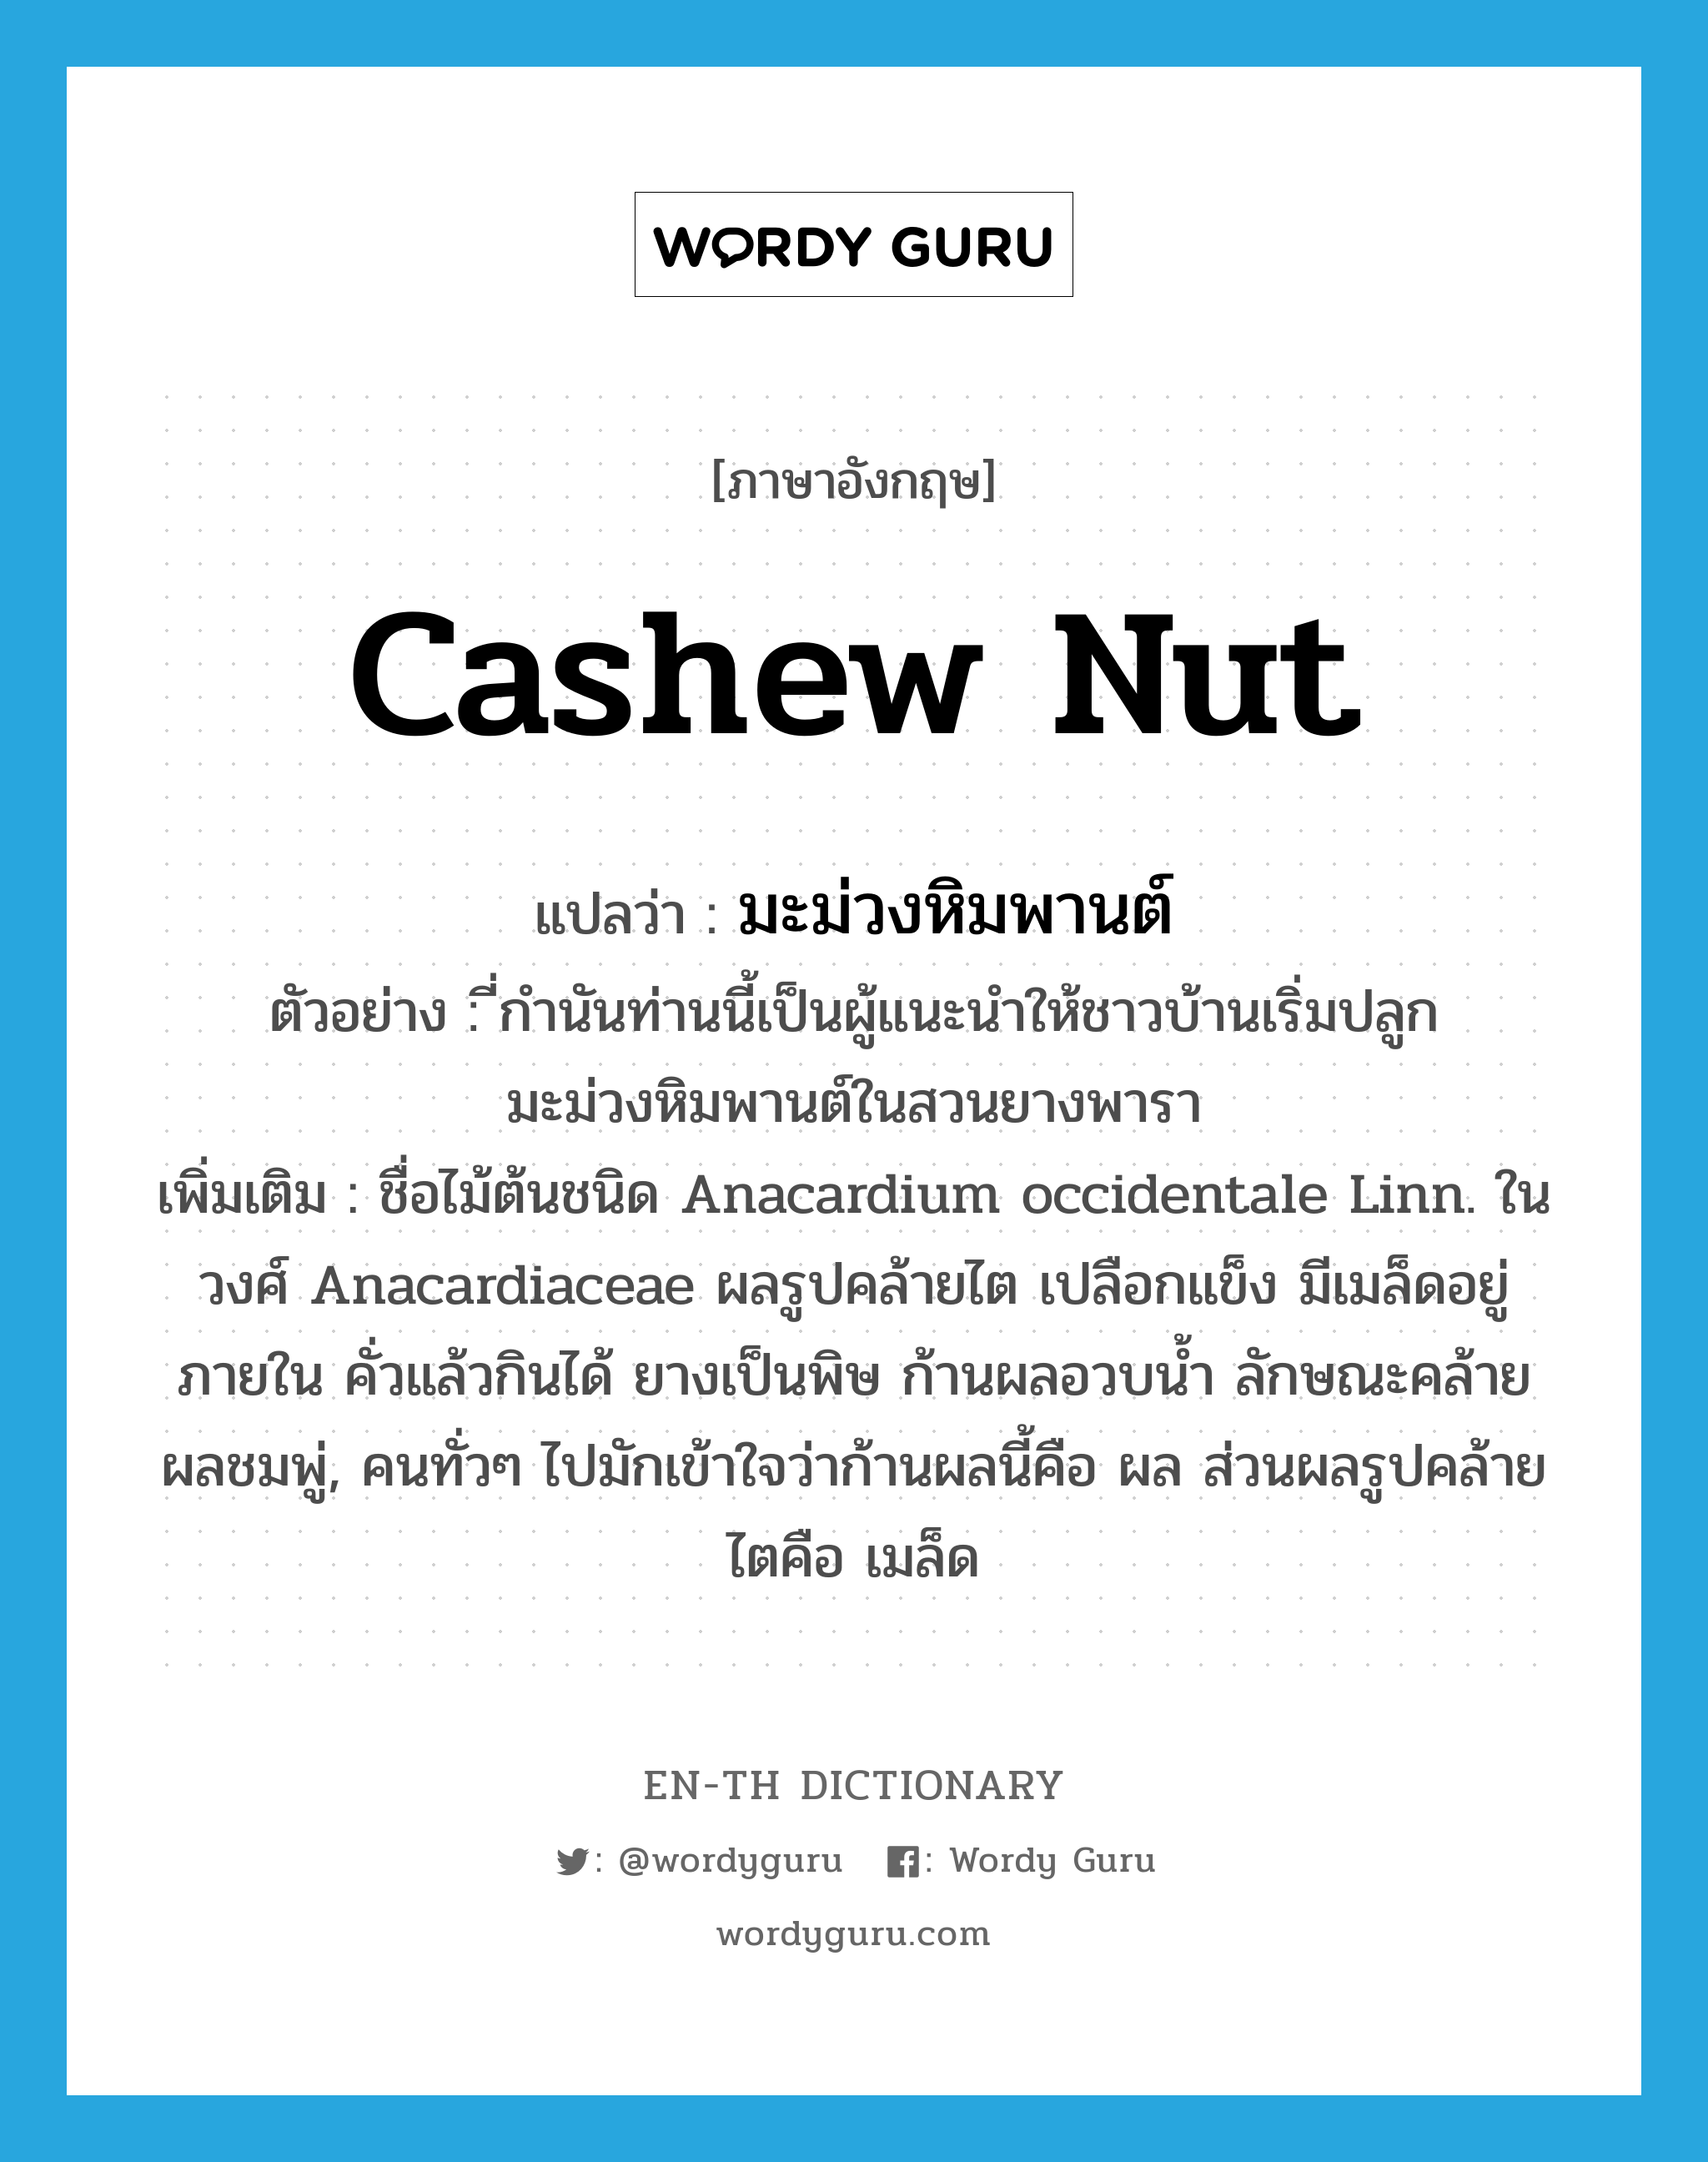 cashew nut แปลว่า?, คำศัพท์ภาษาอังกฤษ cashew nut แปลว่า มะม่วงหิมพานต์ ประเภท N ตัวอย่าง ี่กำนันท่านนี้เป็นผู้แนะนำให้ชาวบ้านเริ่มปลูกมะม่วงหิมพานต์ในสวนยางพารา เพิ่มเติม ชื่อไม้ต้นชนิด Anacardium occidentale Linn. ในวงศ์ Anacardiaceae ผลรูปคล้ายไต เปลือกแข็ง มีเมล็ดอยู่ภายใน คั่วแล้วกินได้ ยางเป็นพิษ ก้านผลอวบน้ำ ลักษณะคล้ายผลชมพู่, คนทั่วๆ ไปมักเข้าใจว่าก้านผลนี้คือ ผล ส่วนผลรูปคล้ายไตคือ เมล็ด หมวด N